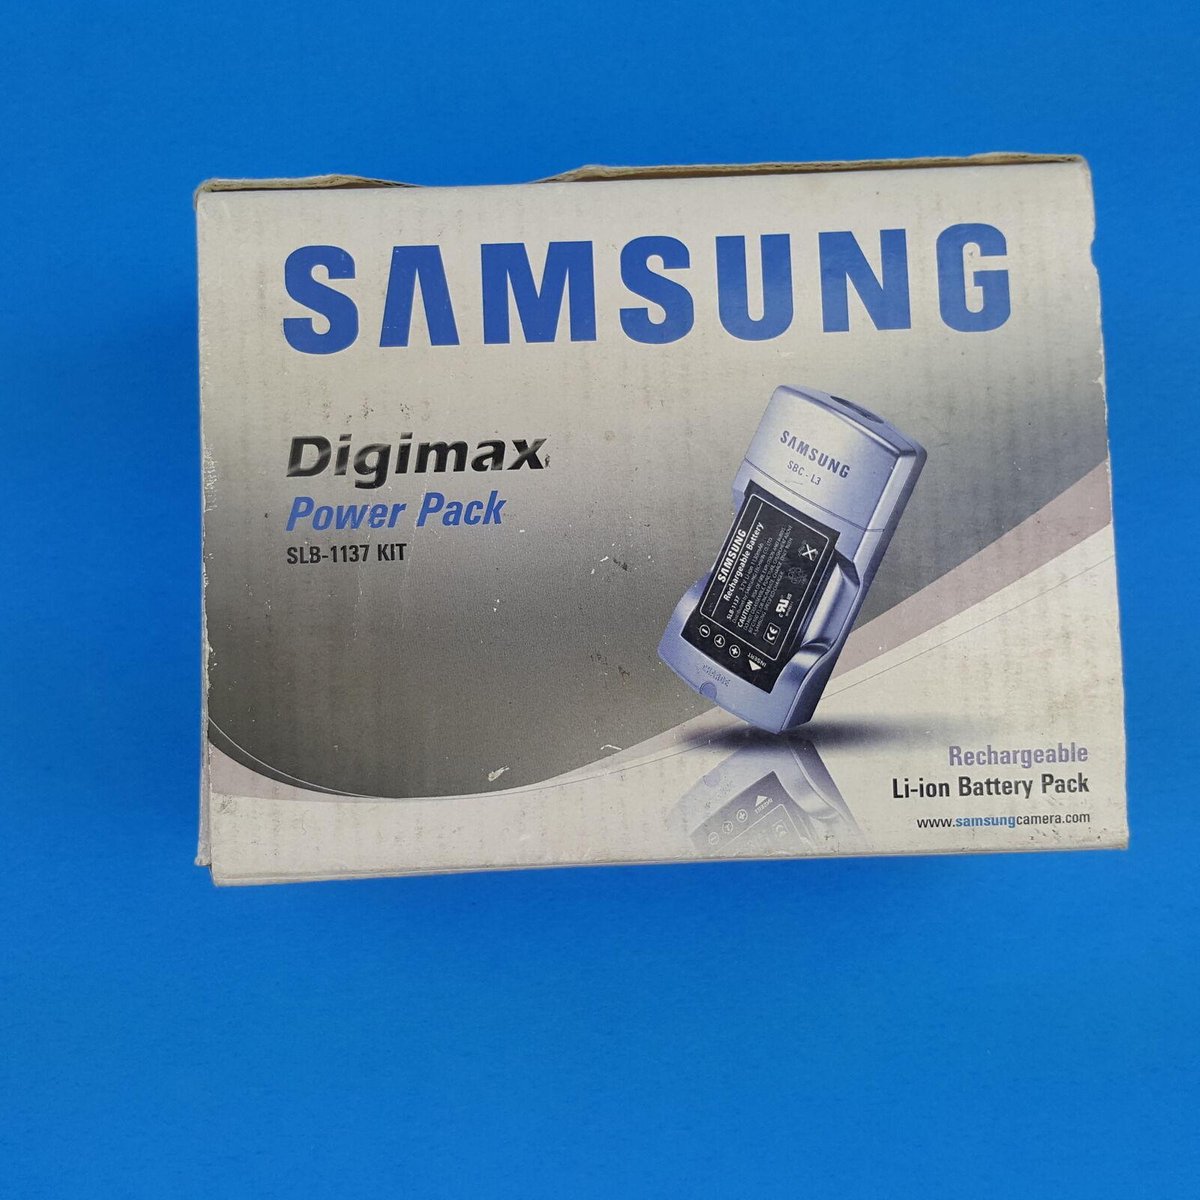 Samsung Digital Power Pack SLB-1137 Kit